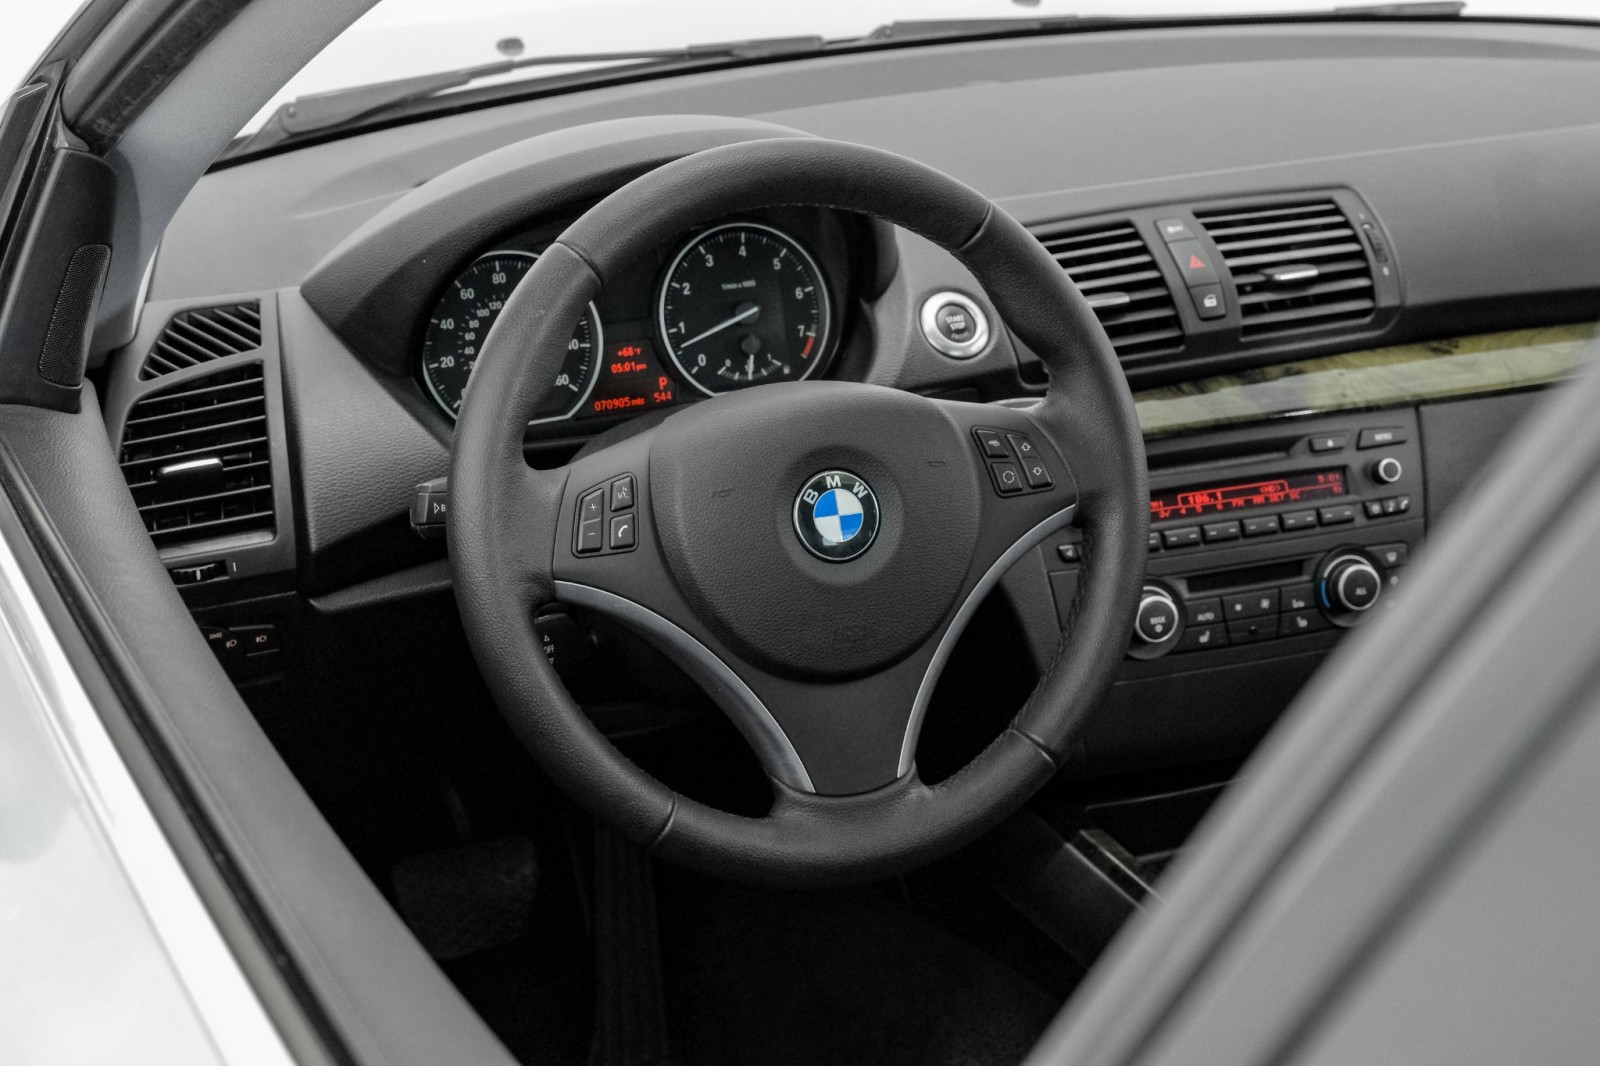 2012 BMW 128i AUTOMATIC PREMIUM PKG SUNROOF LEATHER HEATED SEATS 15